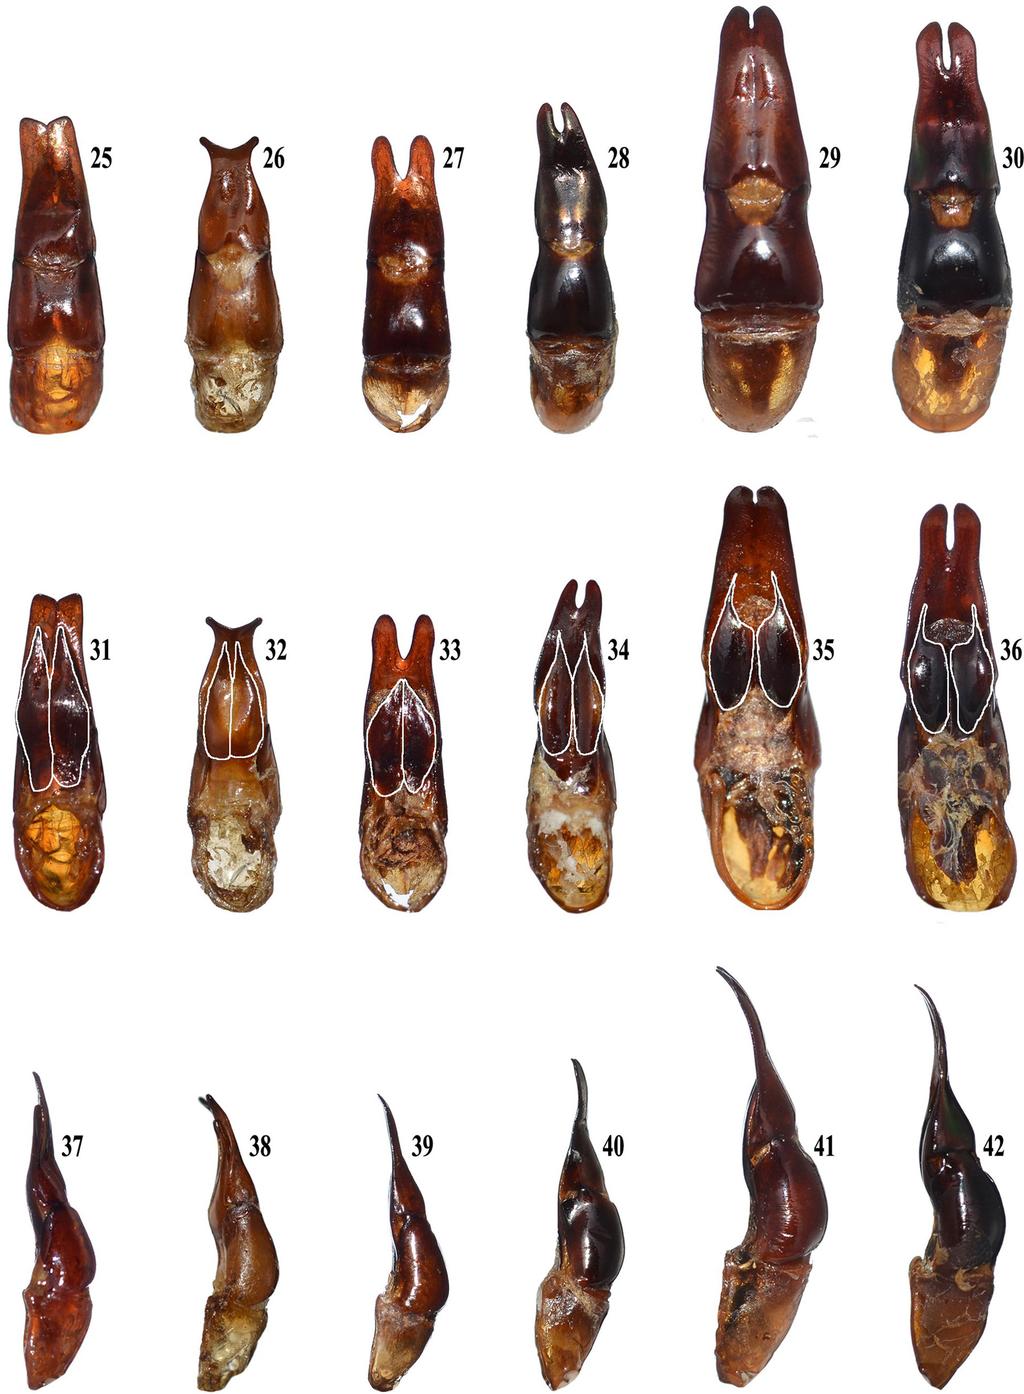 6 Insecta Mundi 0195, September 2011 Monzón Sierra and García Morales Figures 25-42. Male genital capsule of Chrysina spp. 25-30) Dorsal habitus. 25) C. blackalleri. 26) C. dianae. 27) C. taylori.